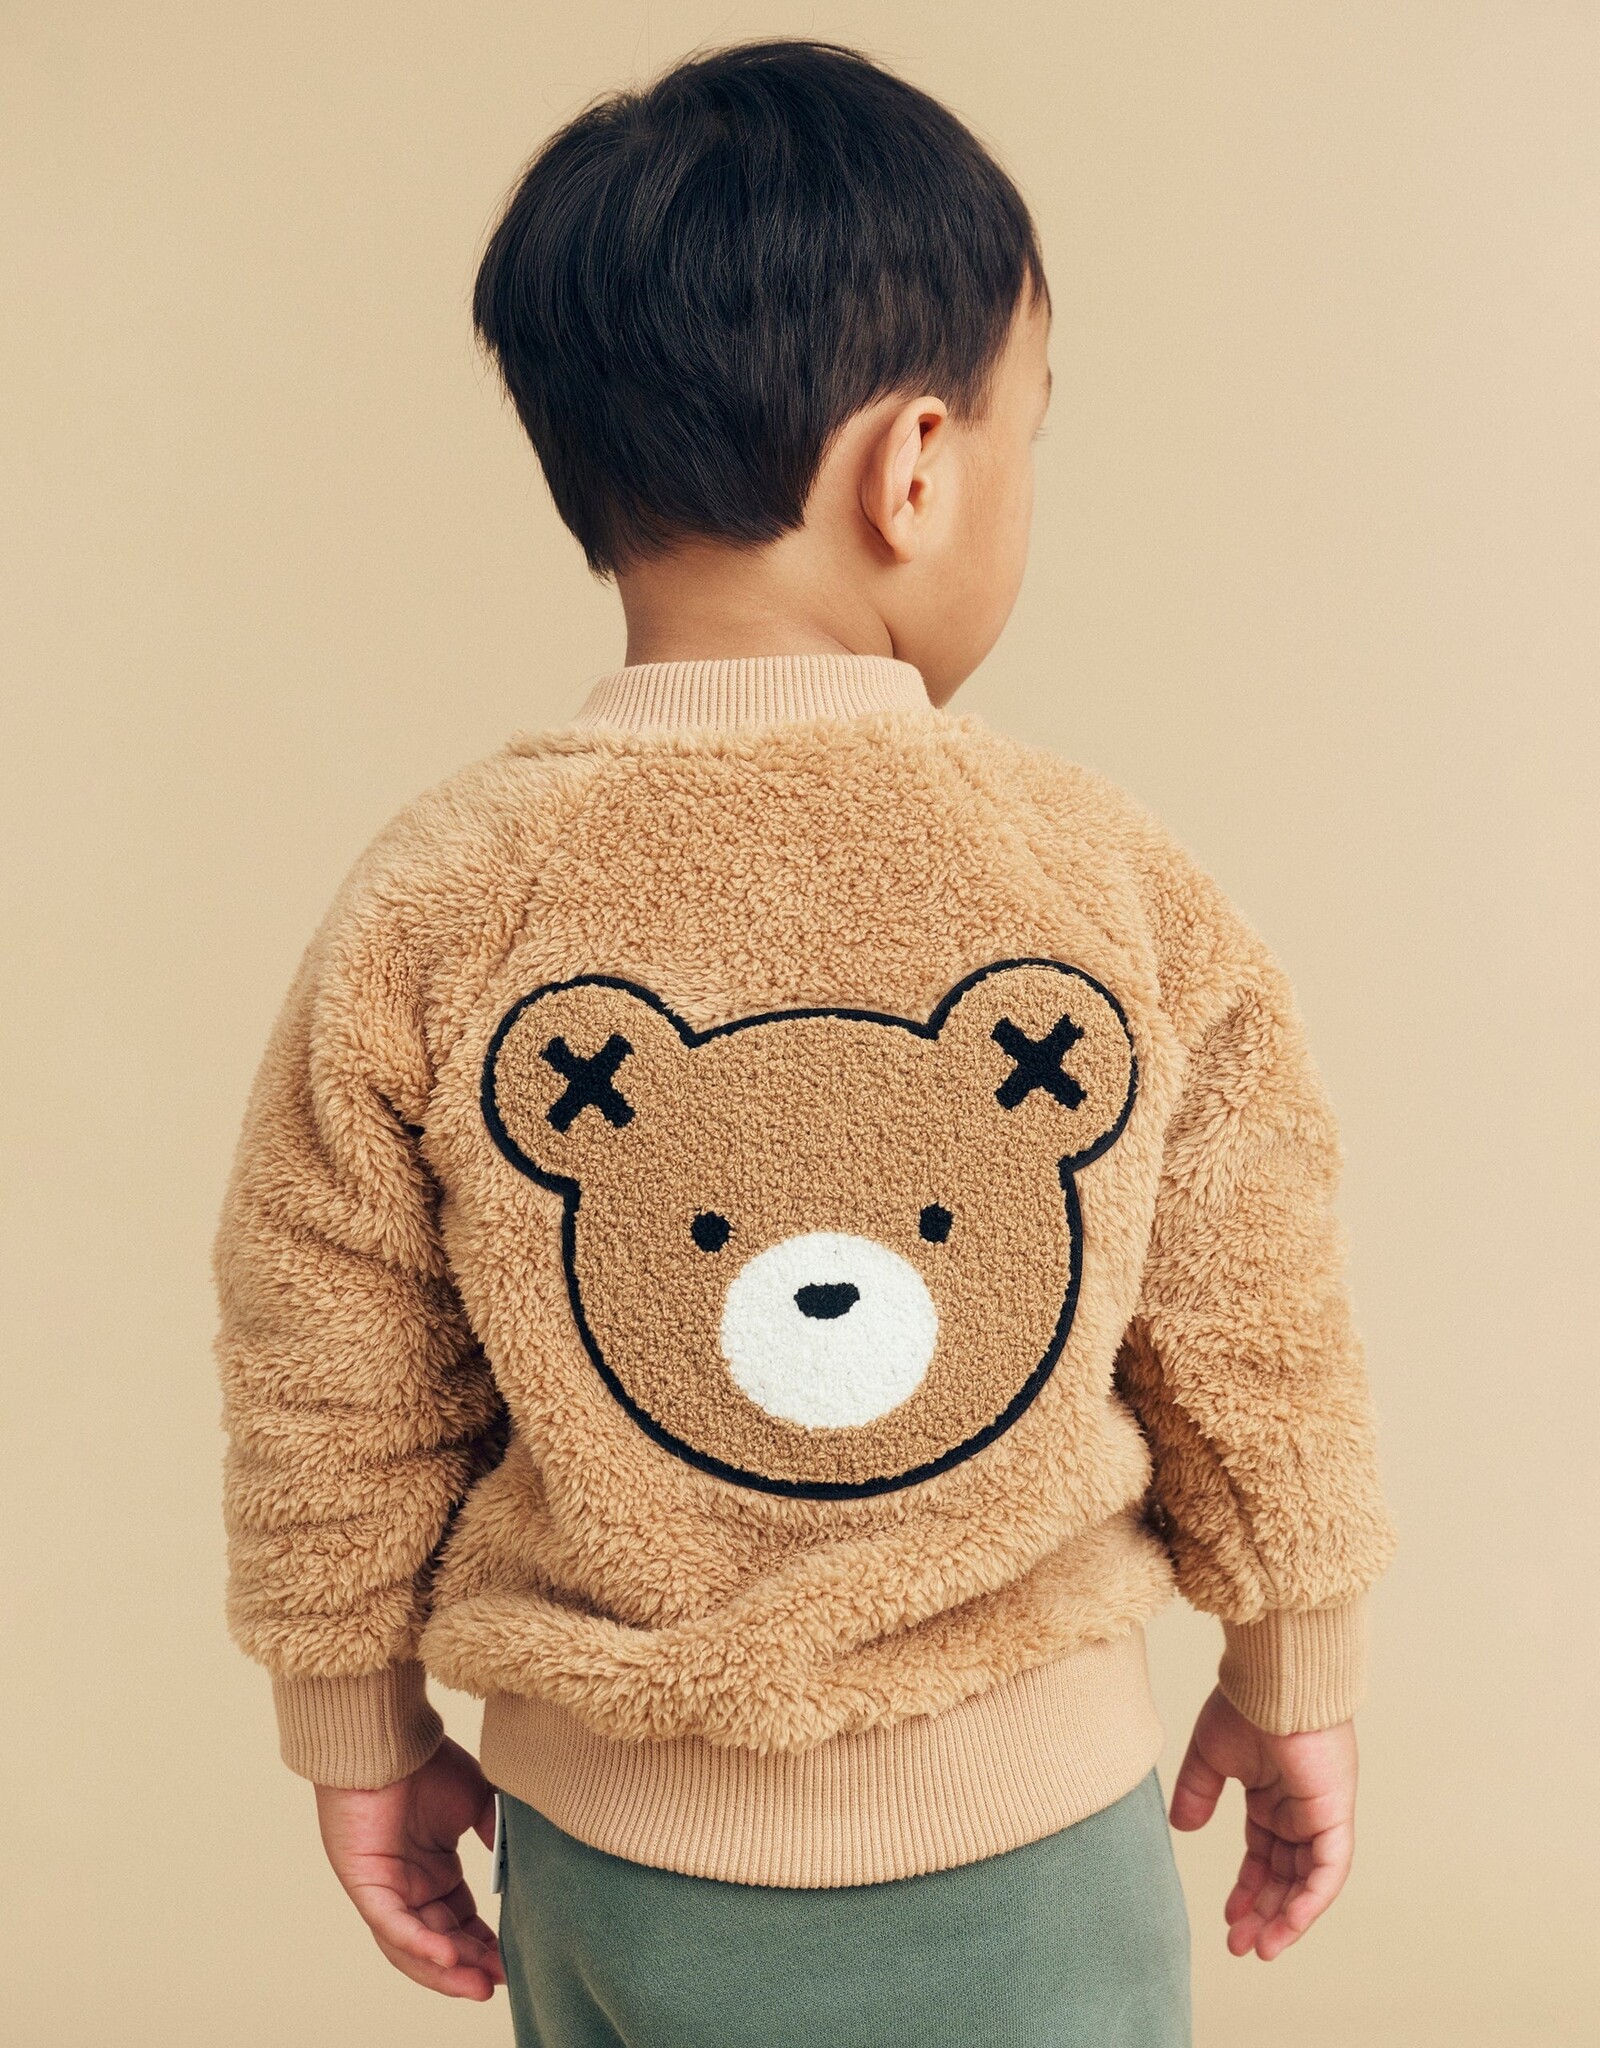 Huxbaby Huxbaby - Teddy Bear Fur Jacket